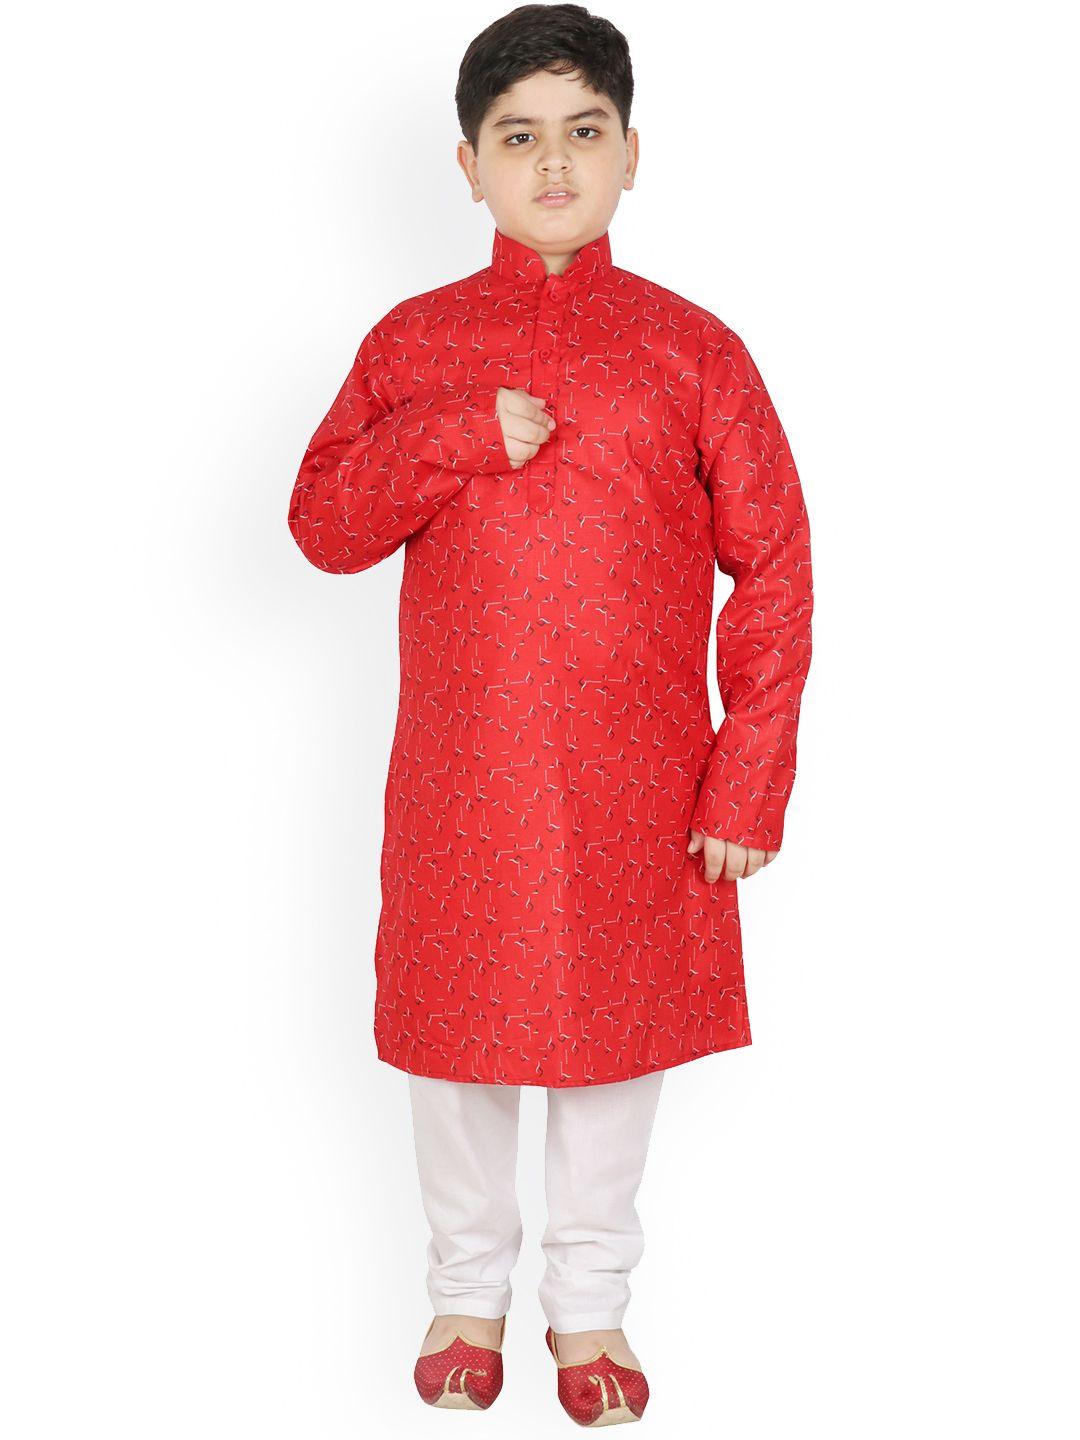 SG YUVRAJ Boys Red Ethnic Motifs Printed Kurta with Pyjamas